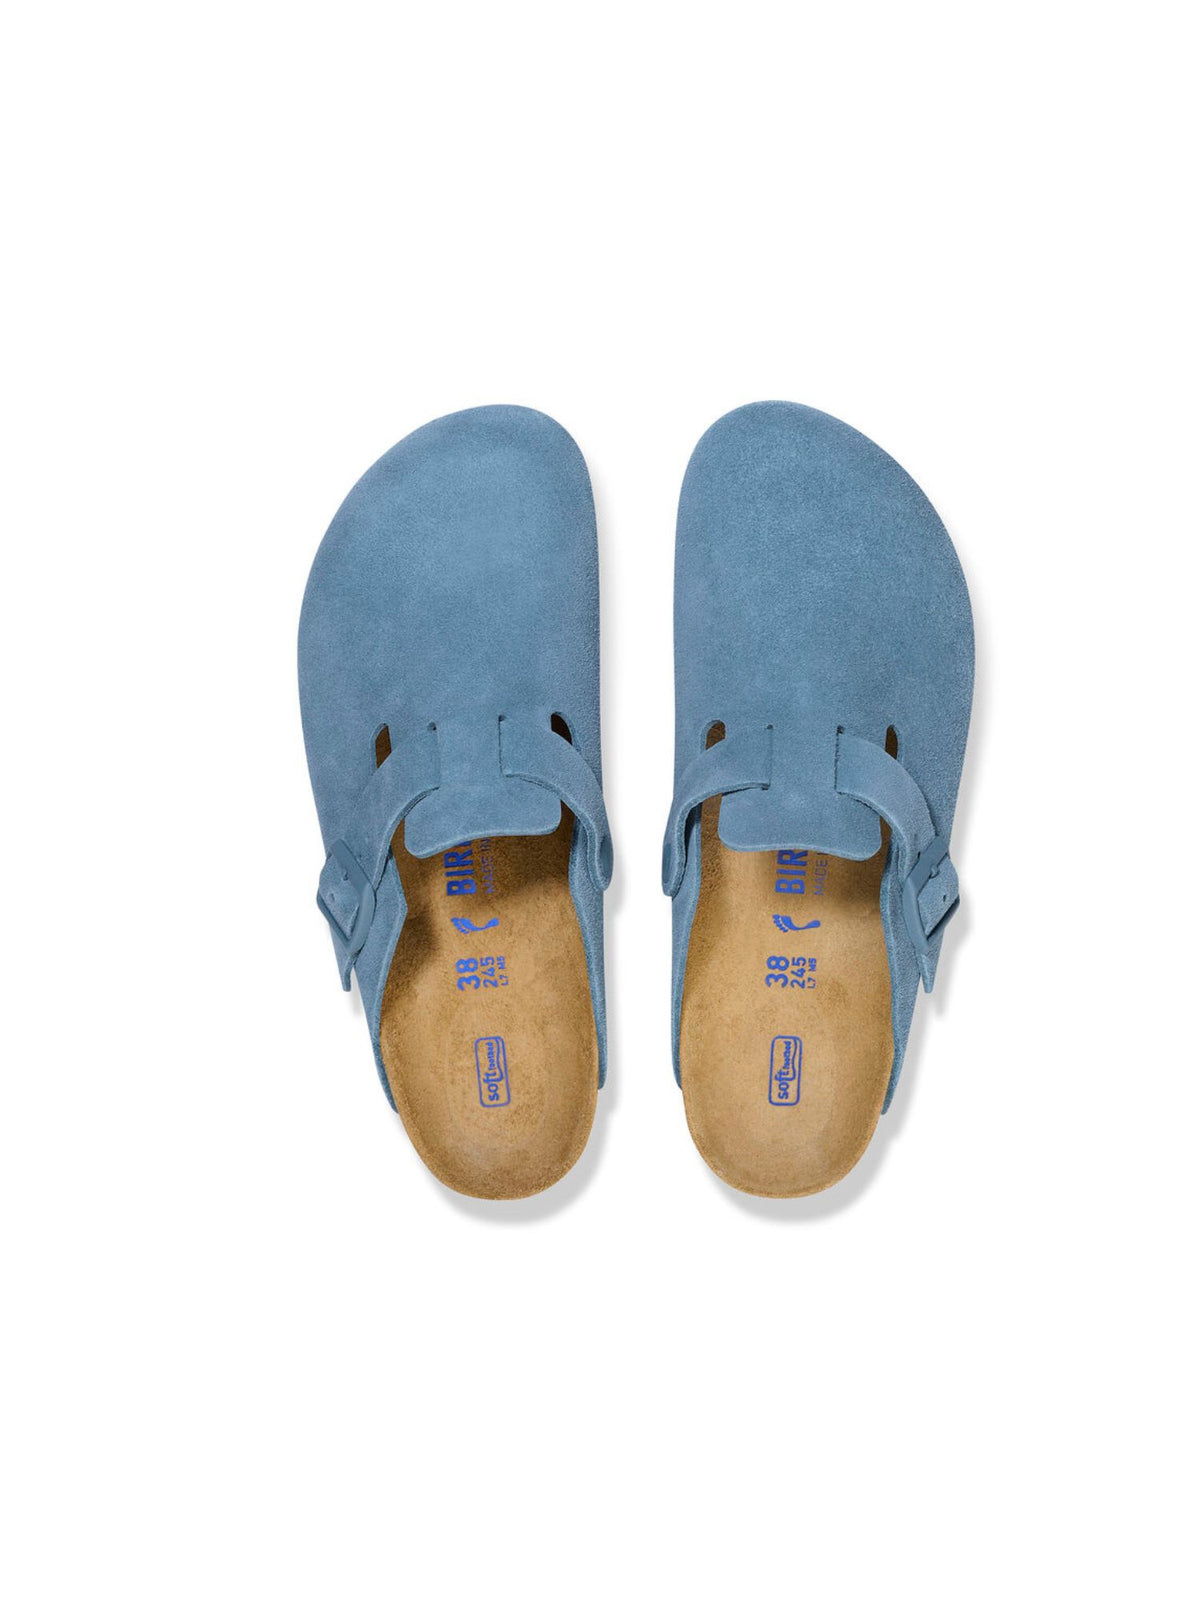 birkenstock boston soft footbed suede clog in elemental blue-top